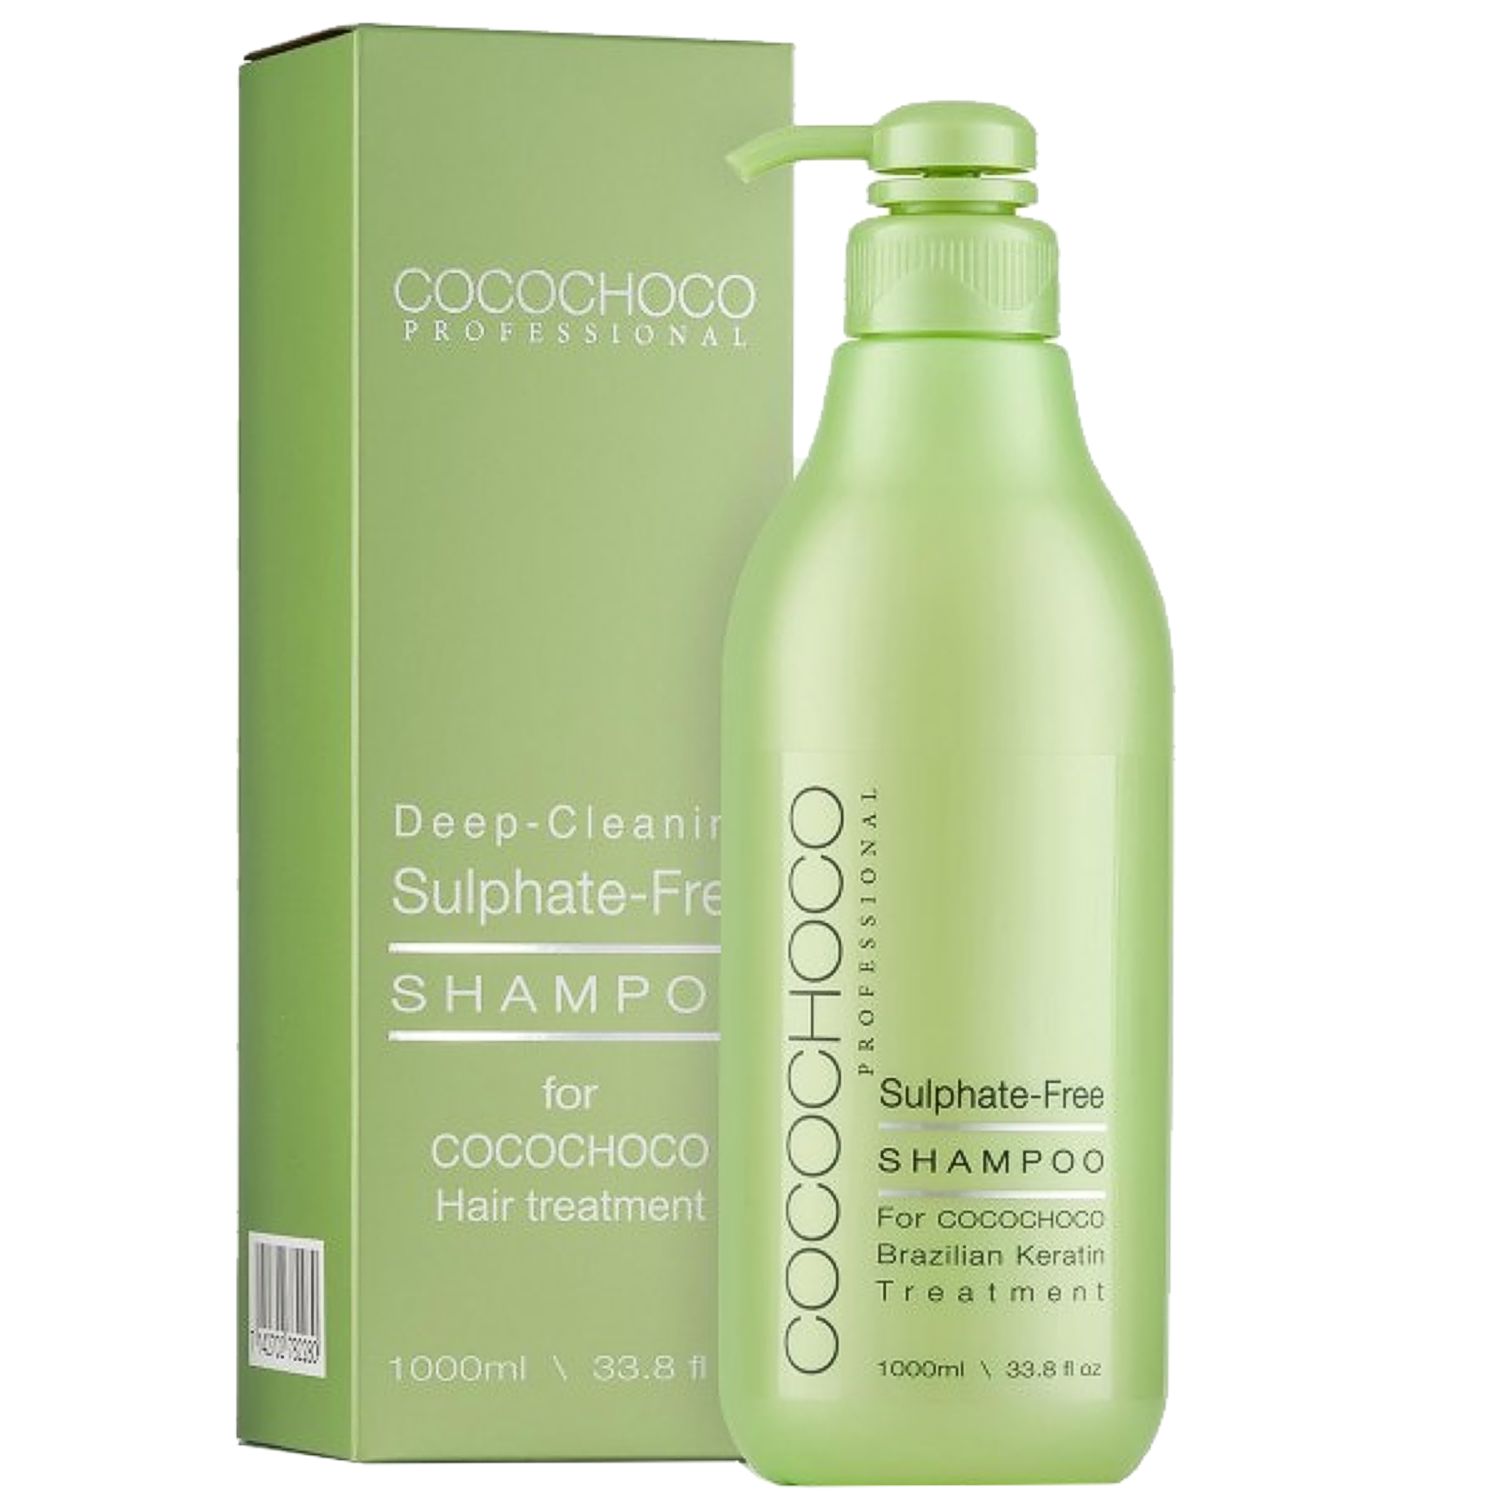 COCOCHOCO Sulphate-Free Shampoo 1 L